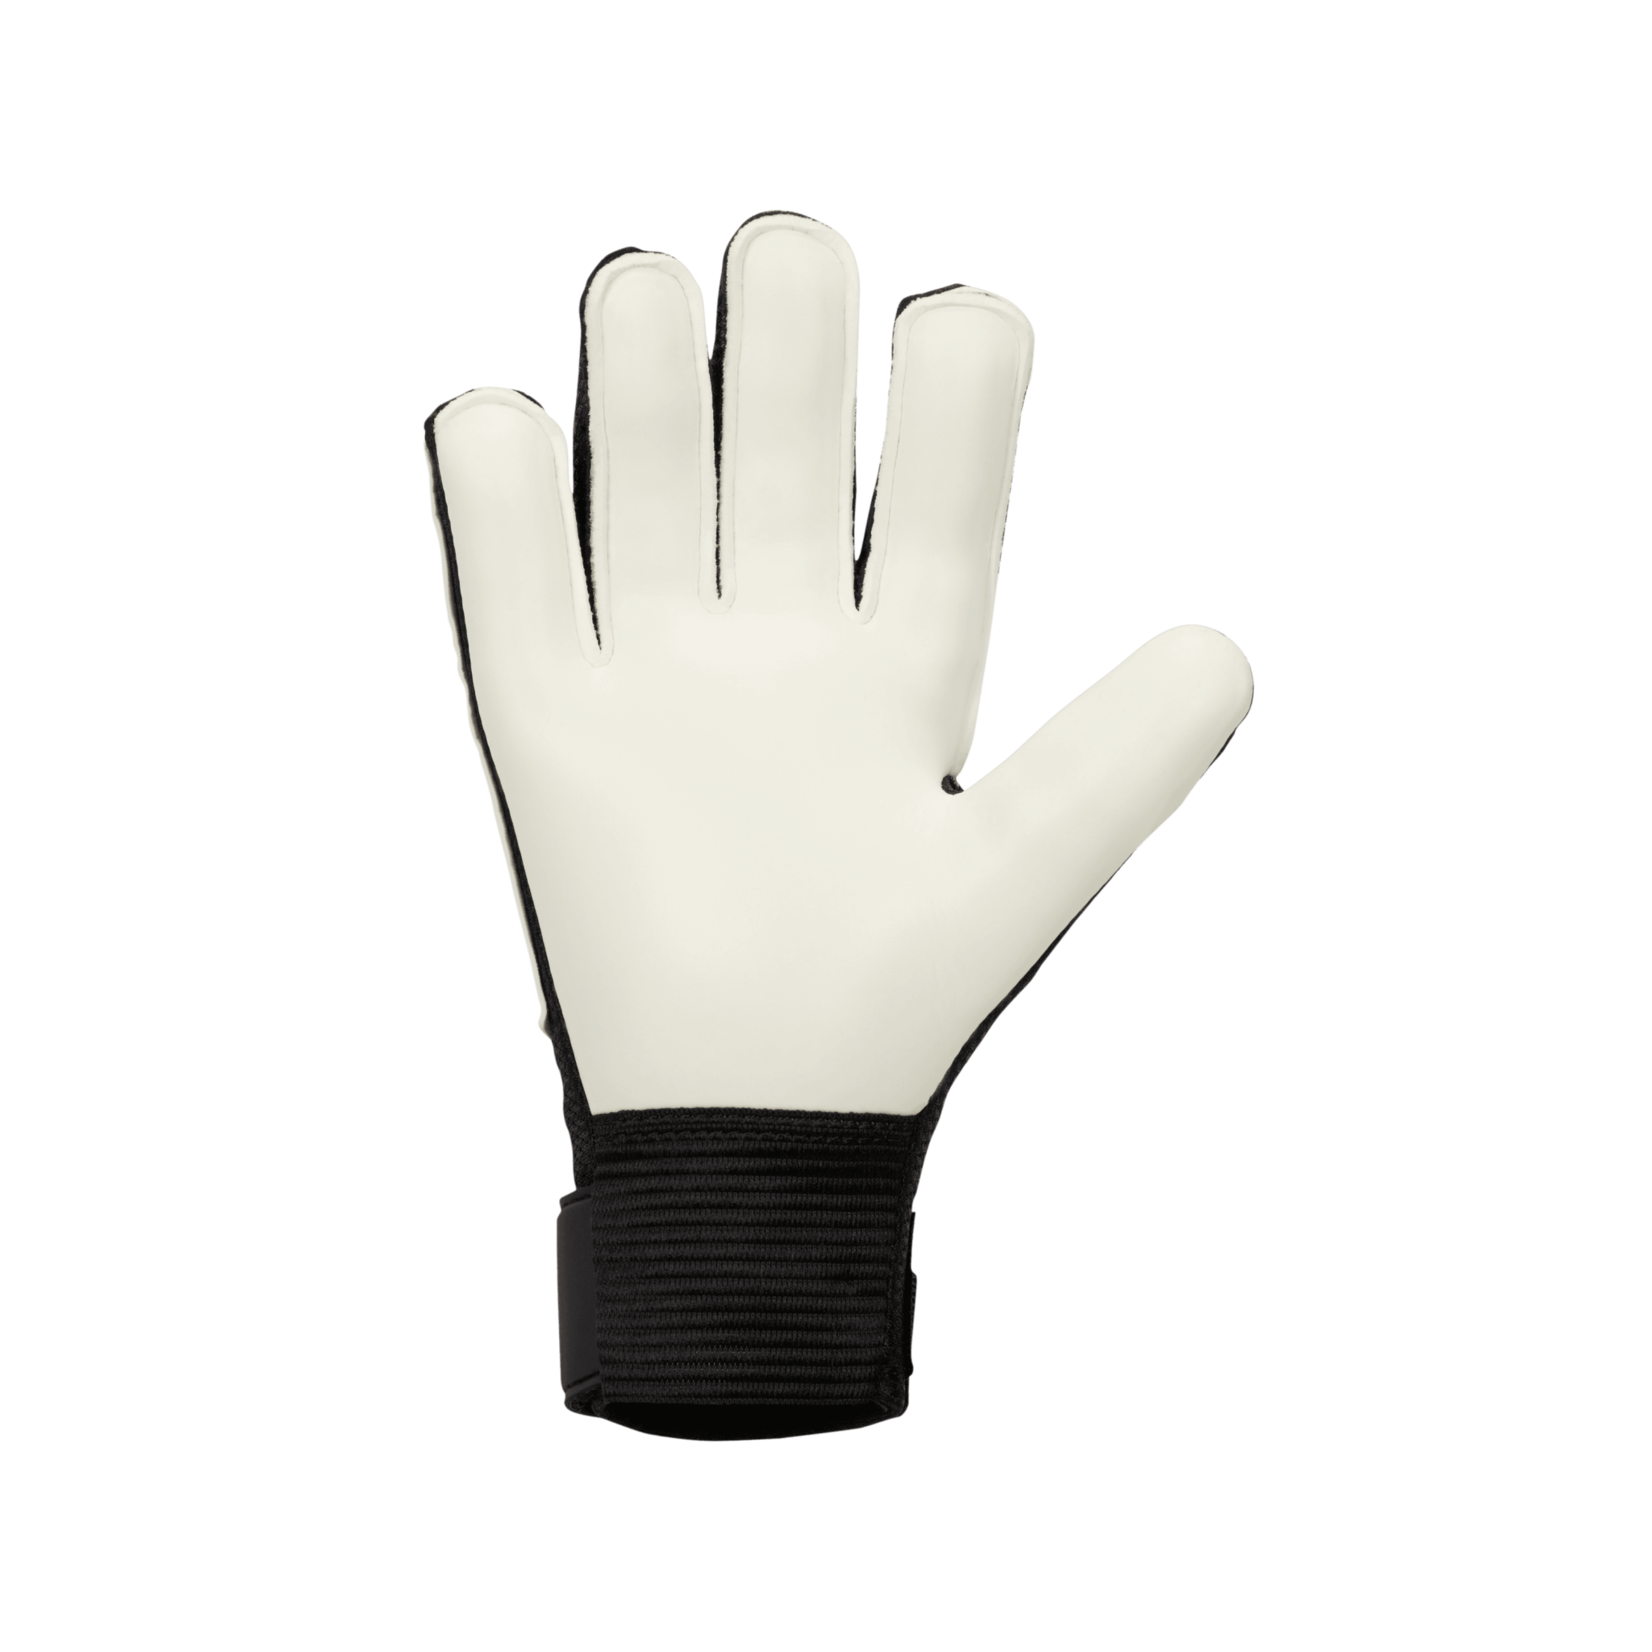 Nike Nike Match Jr. Goal Keeper Gloves Black/White/Gold